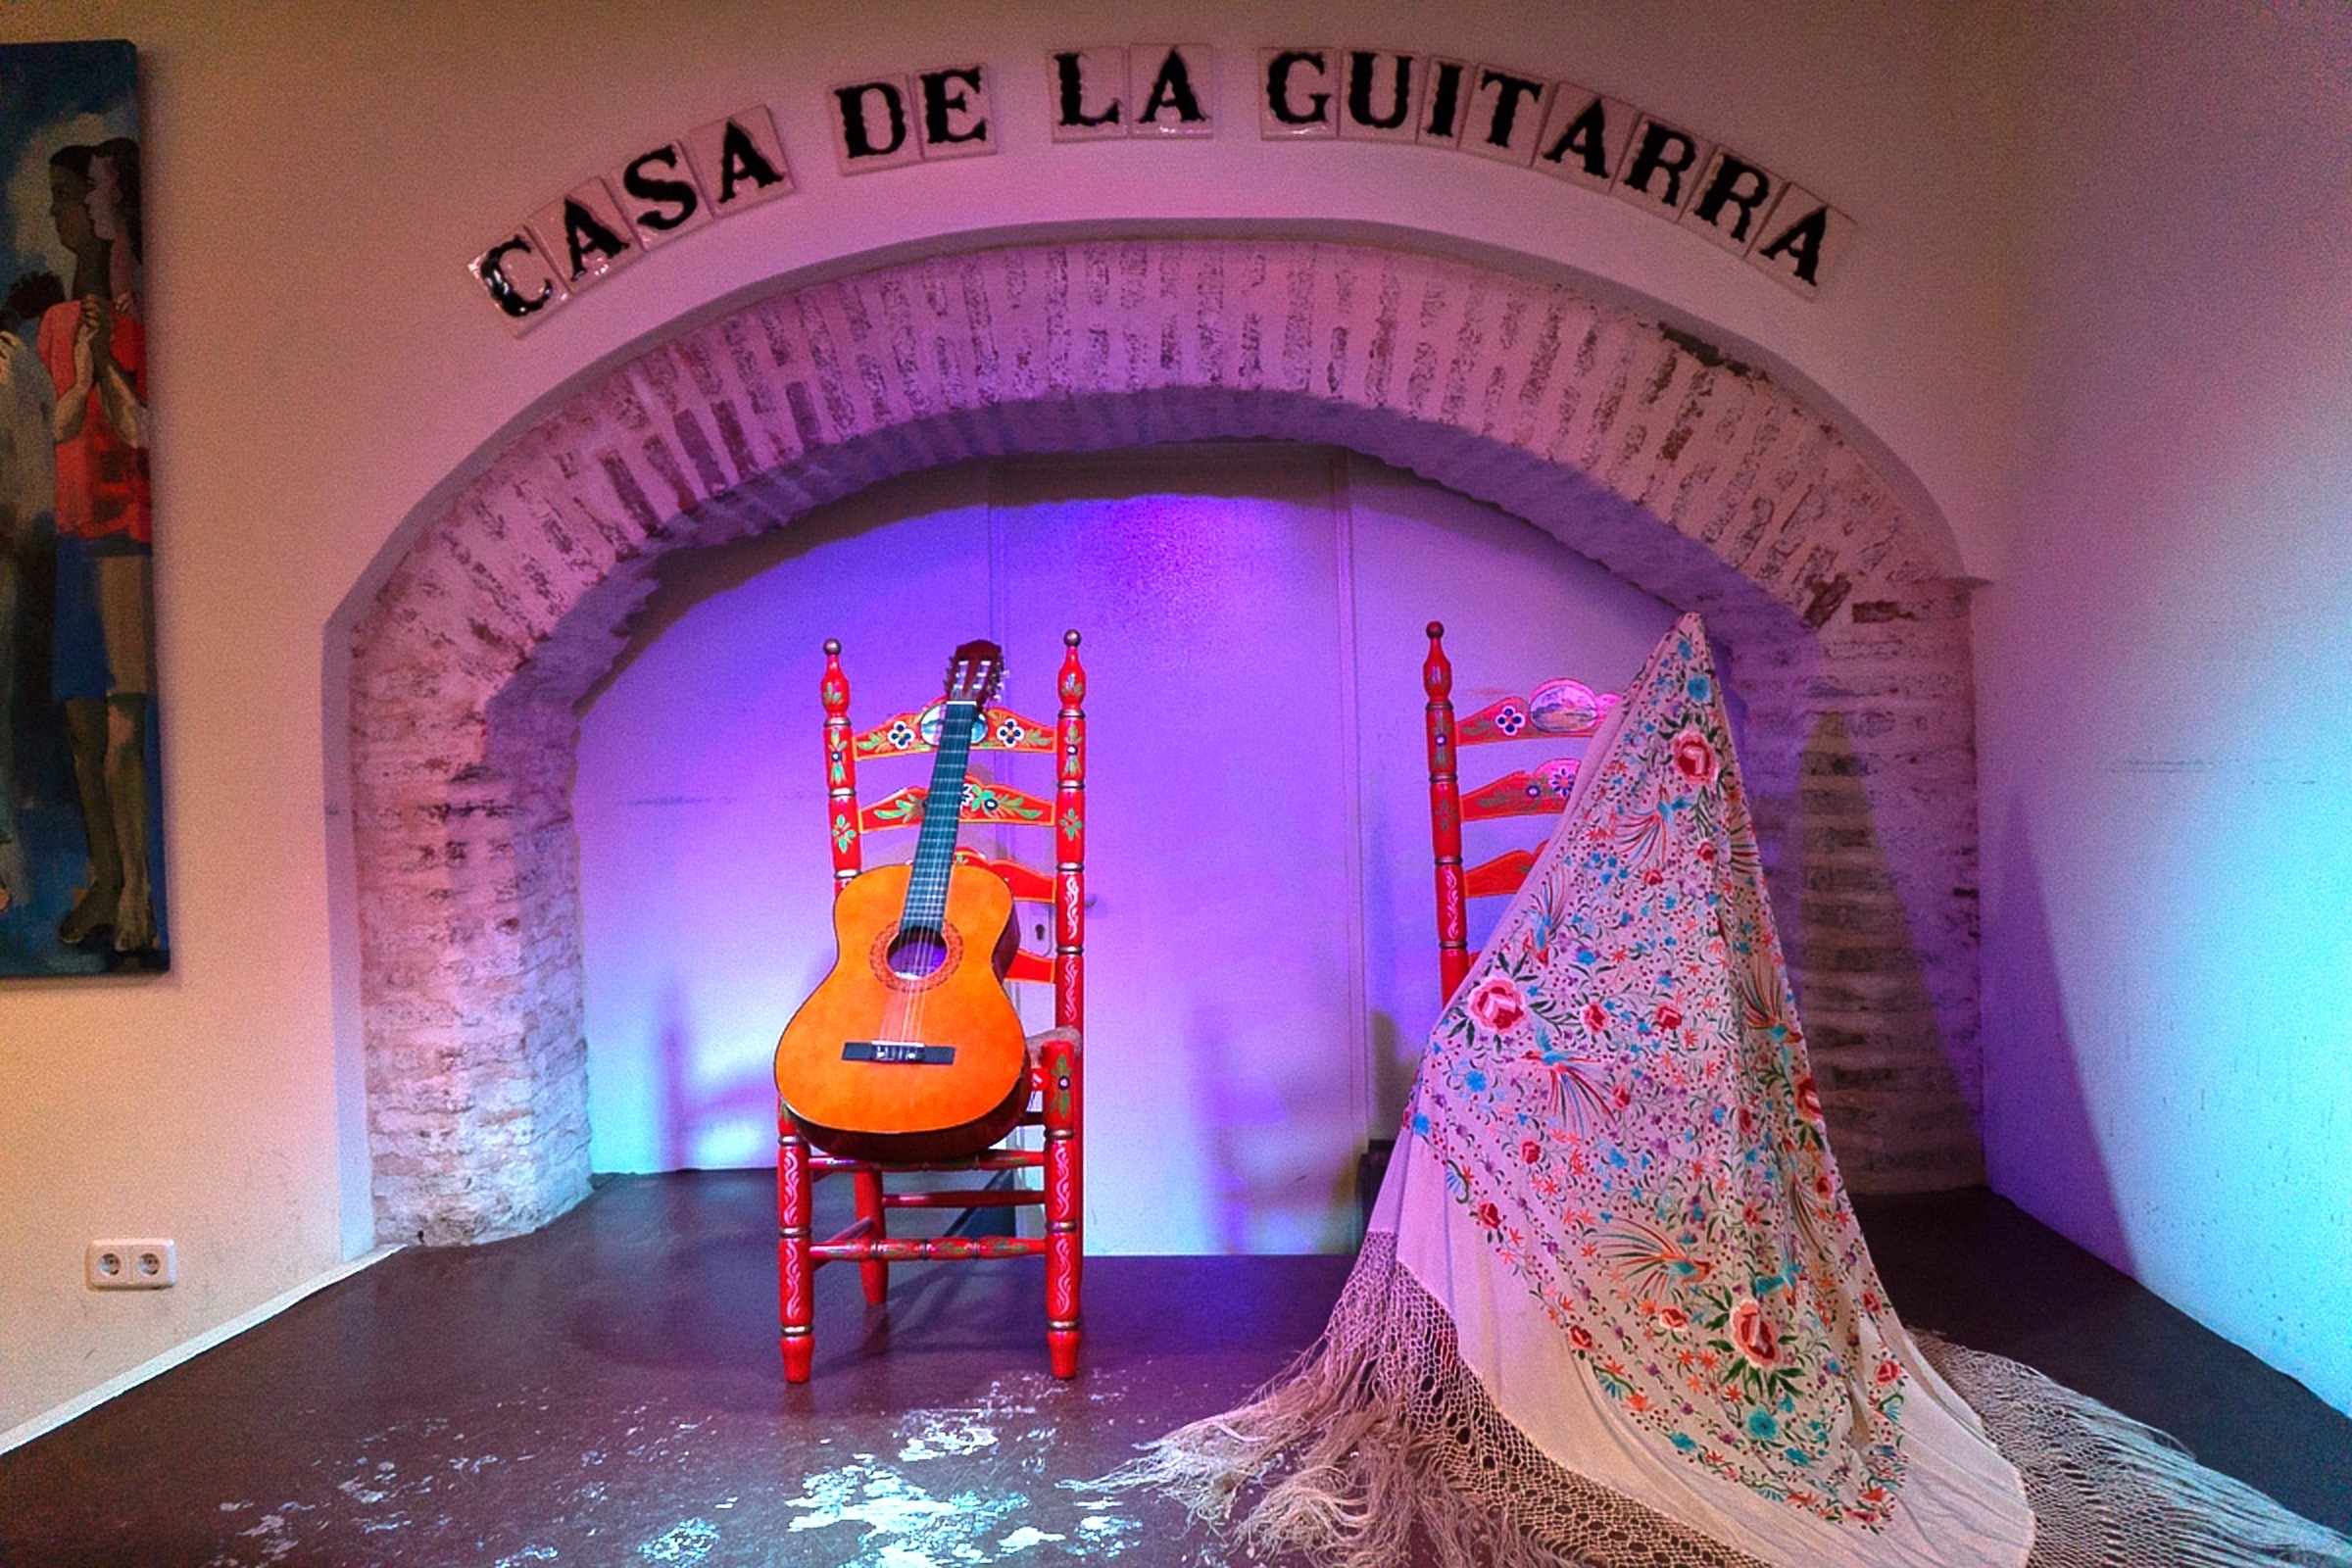 Flamenco + Tapas in Seville: Guided Visit